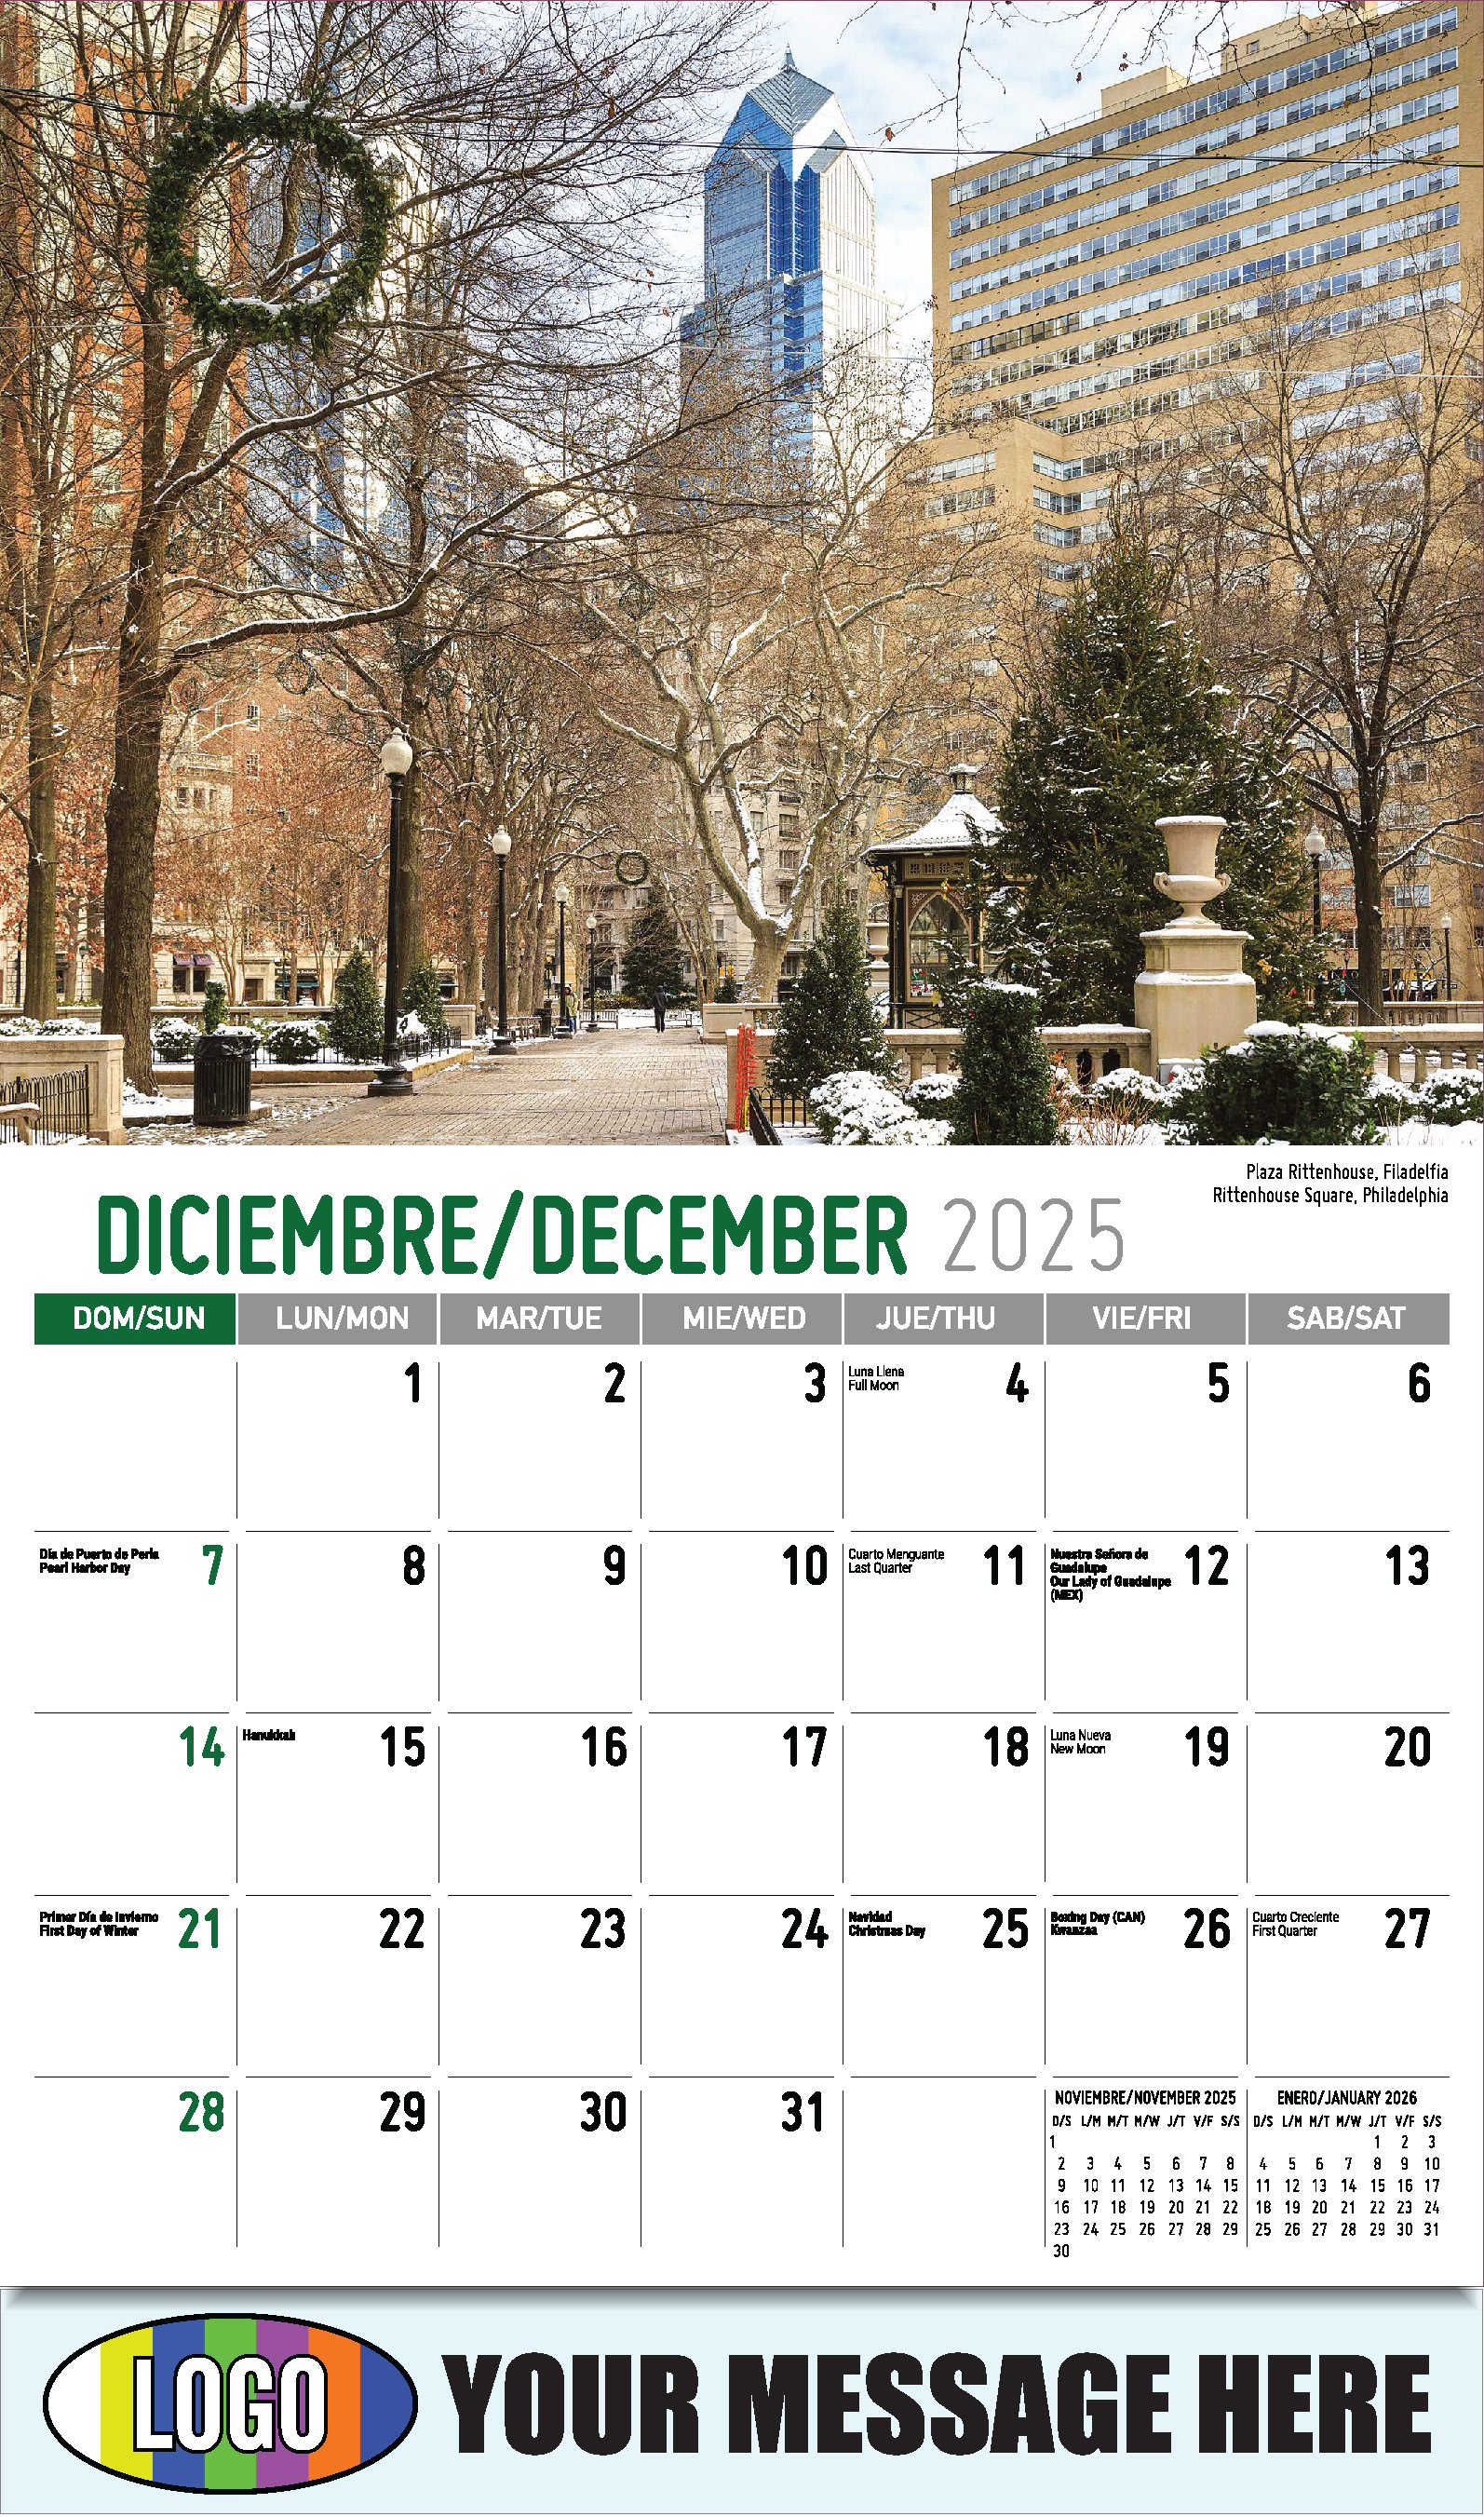 Scenes of America 2025 Bilingual Business Promo Calendar - December